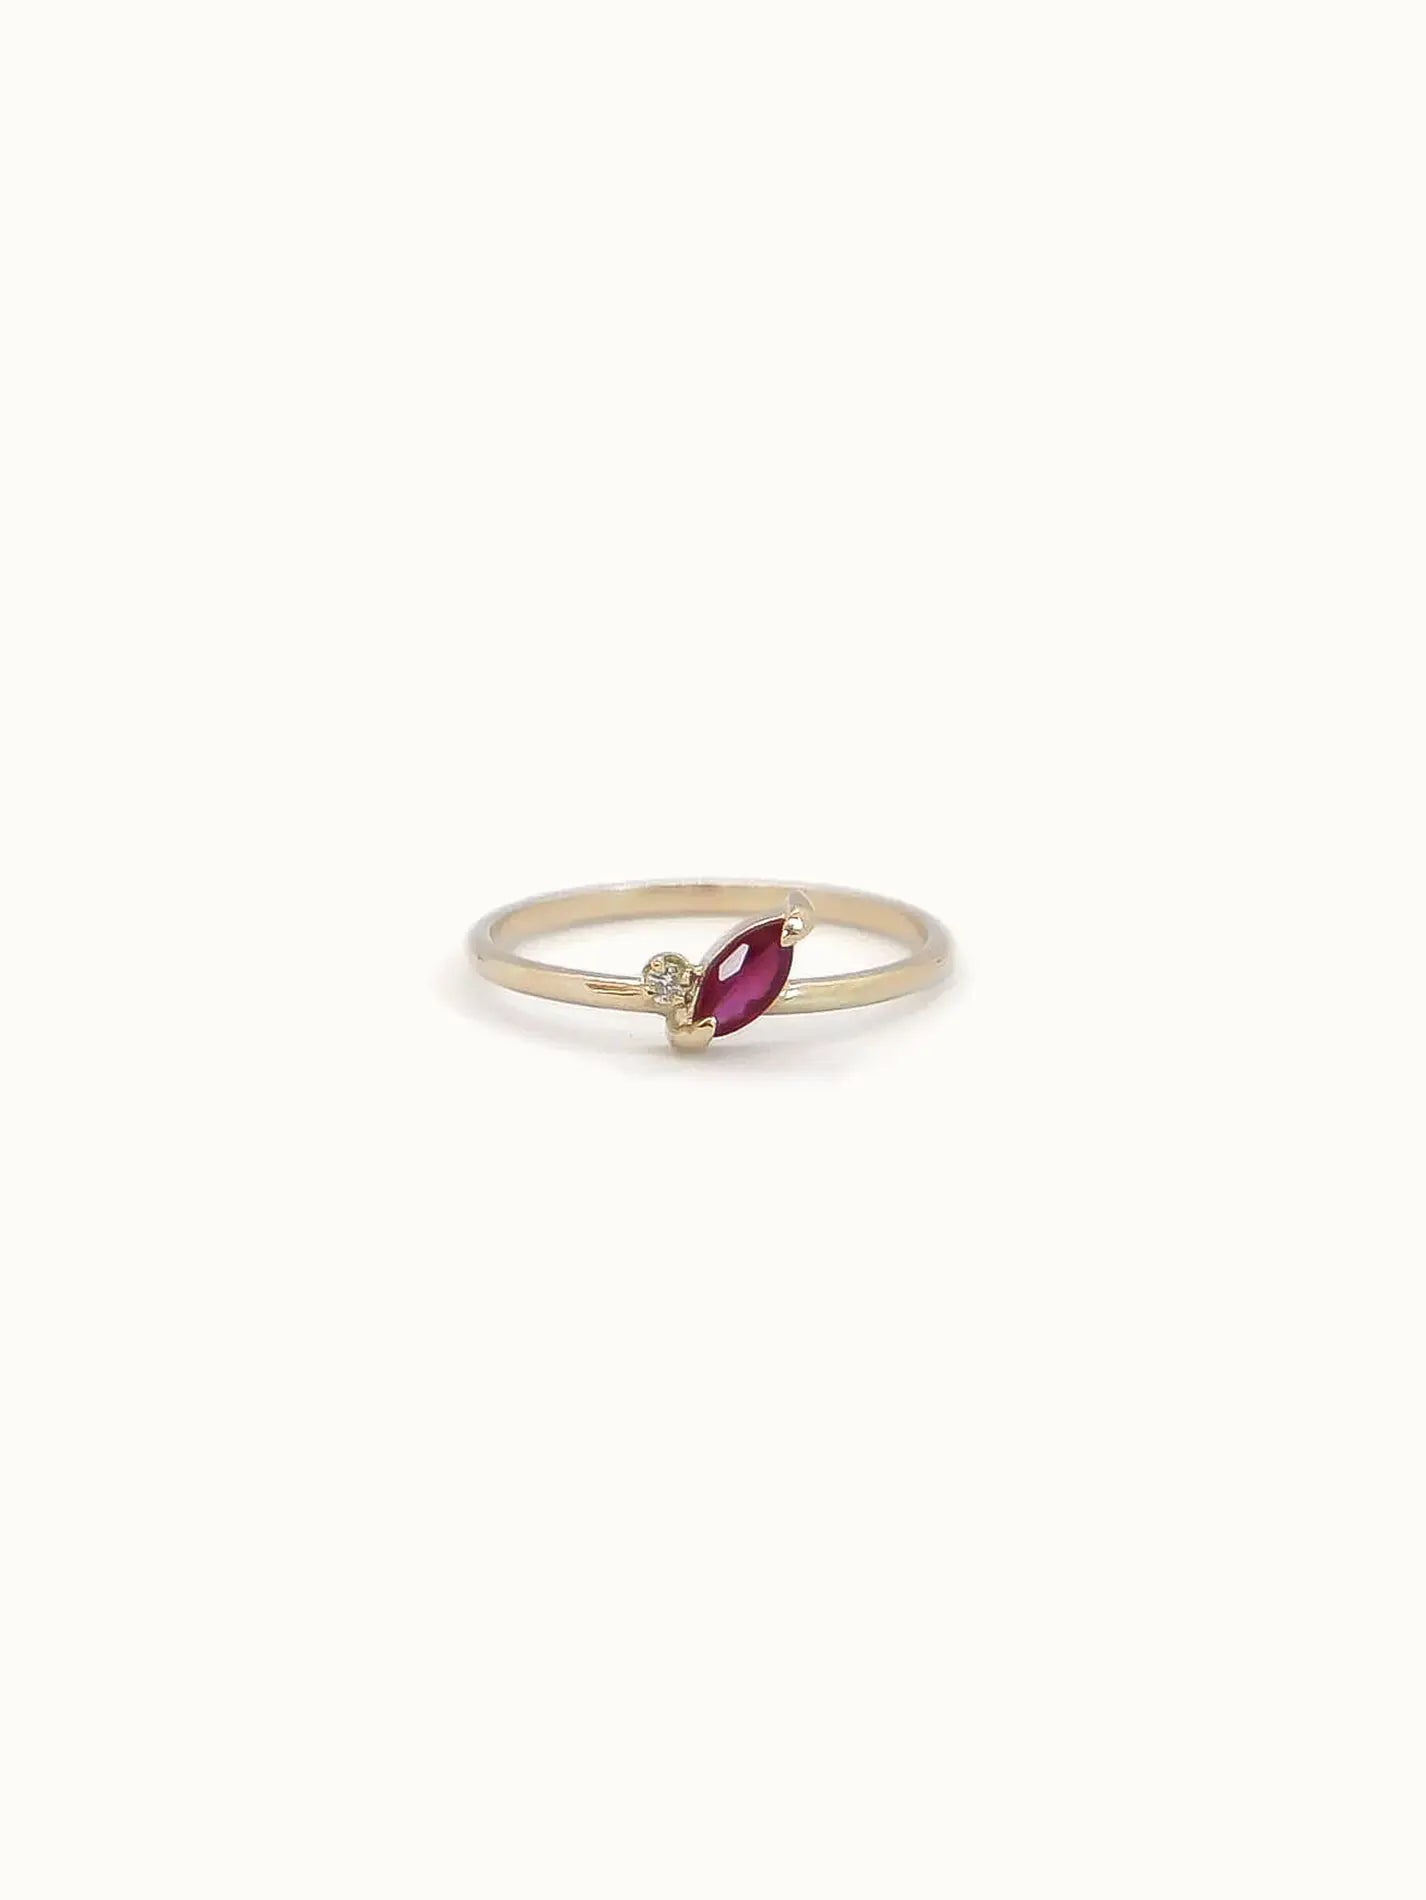 Petal ring. Ping ruby marquise - studiocosette.com